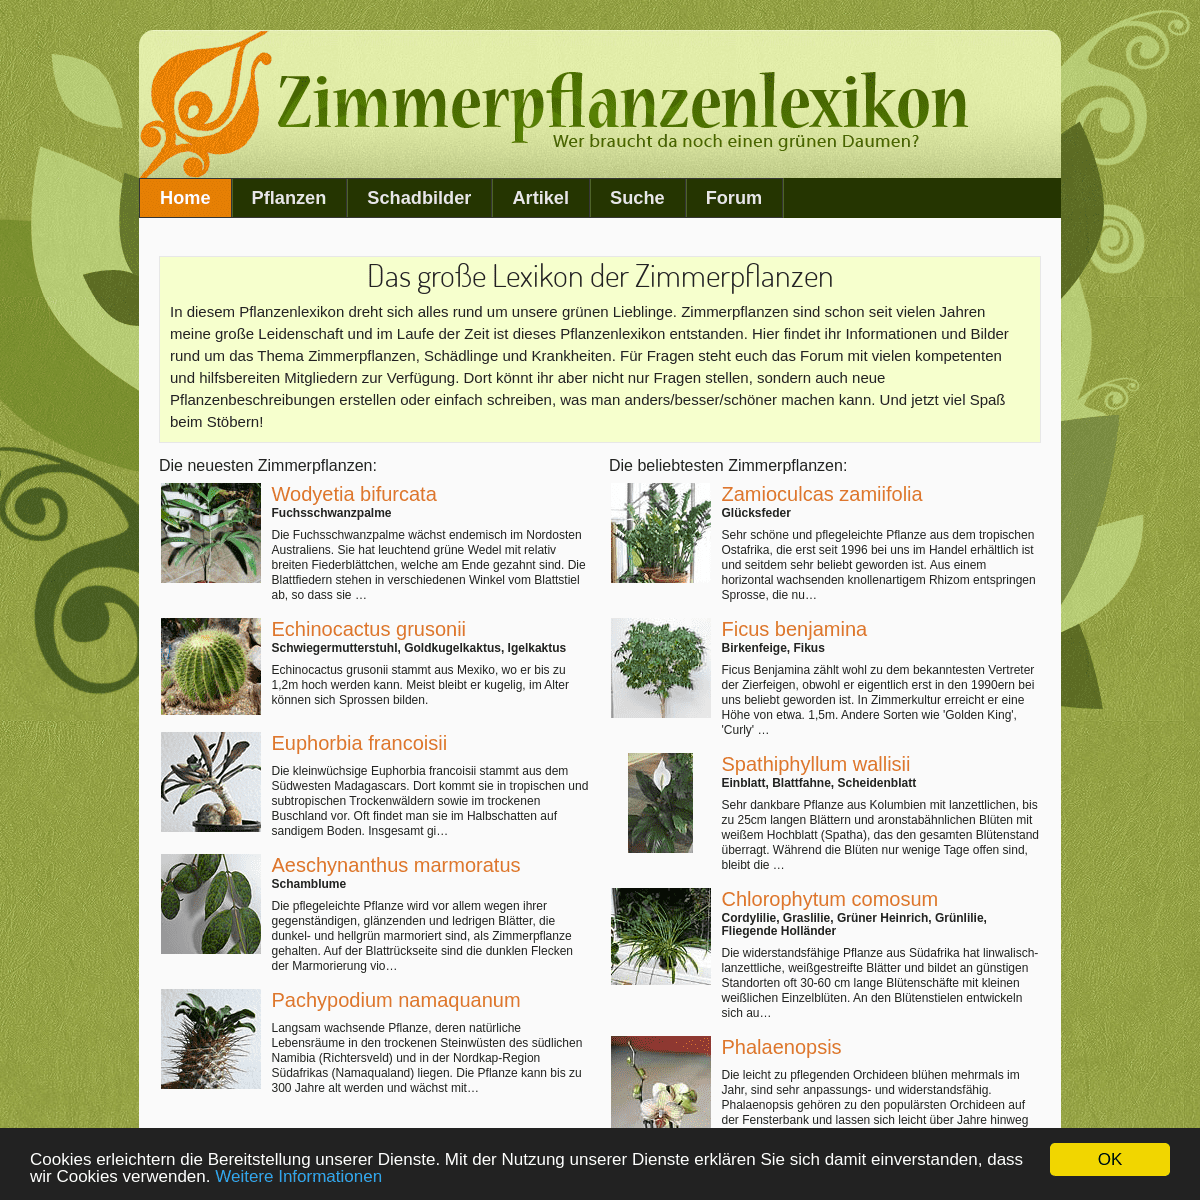 A complete backup of zimmerpflanzenlexikon.info